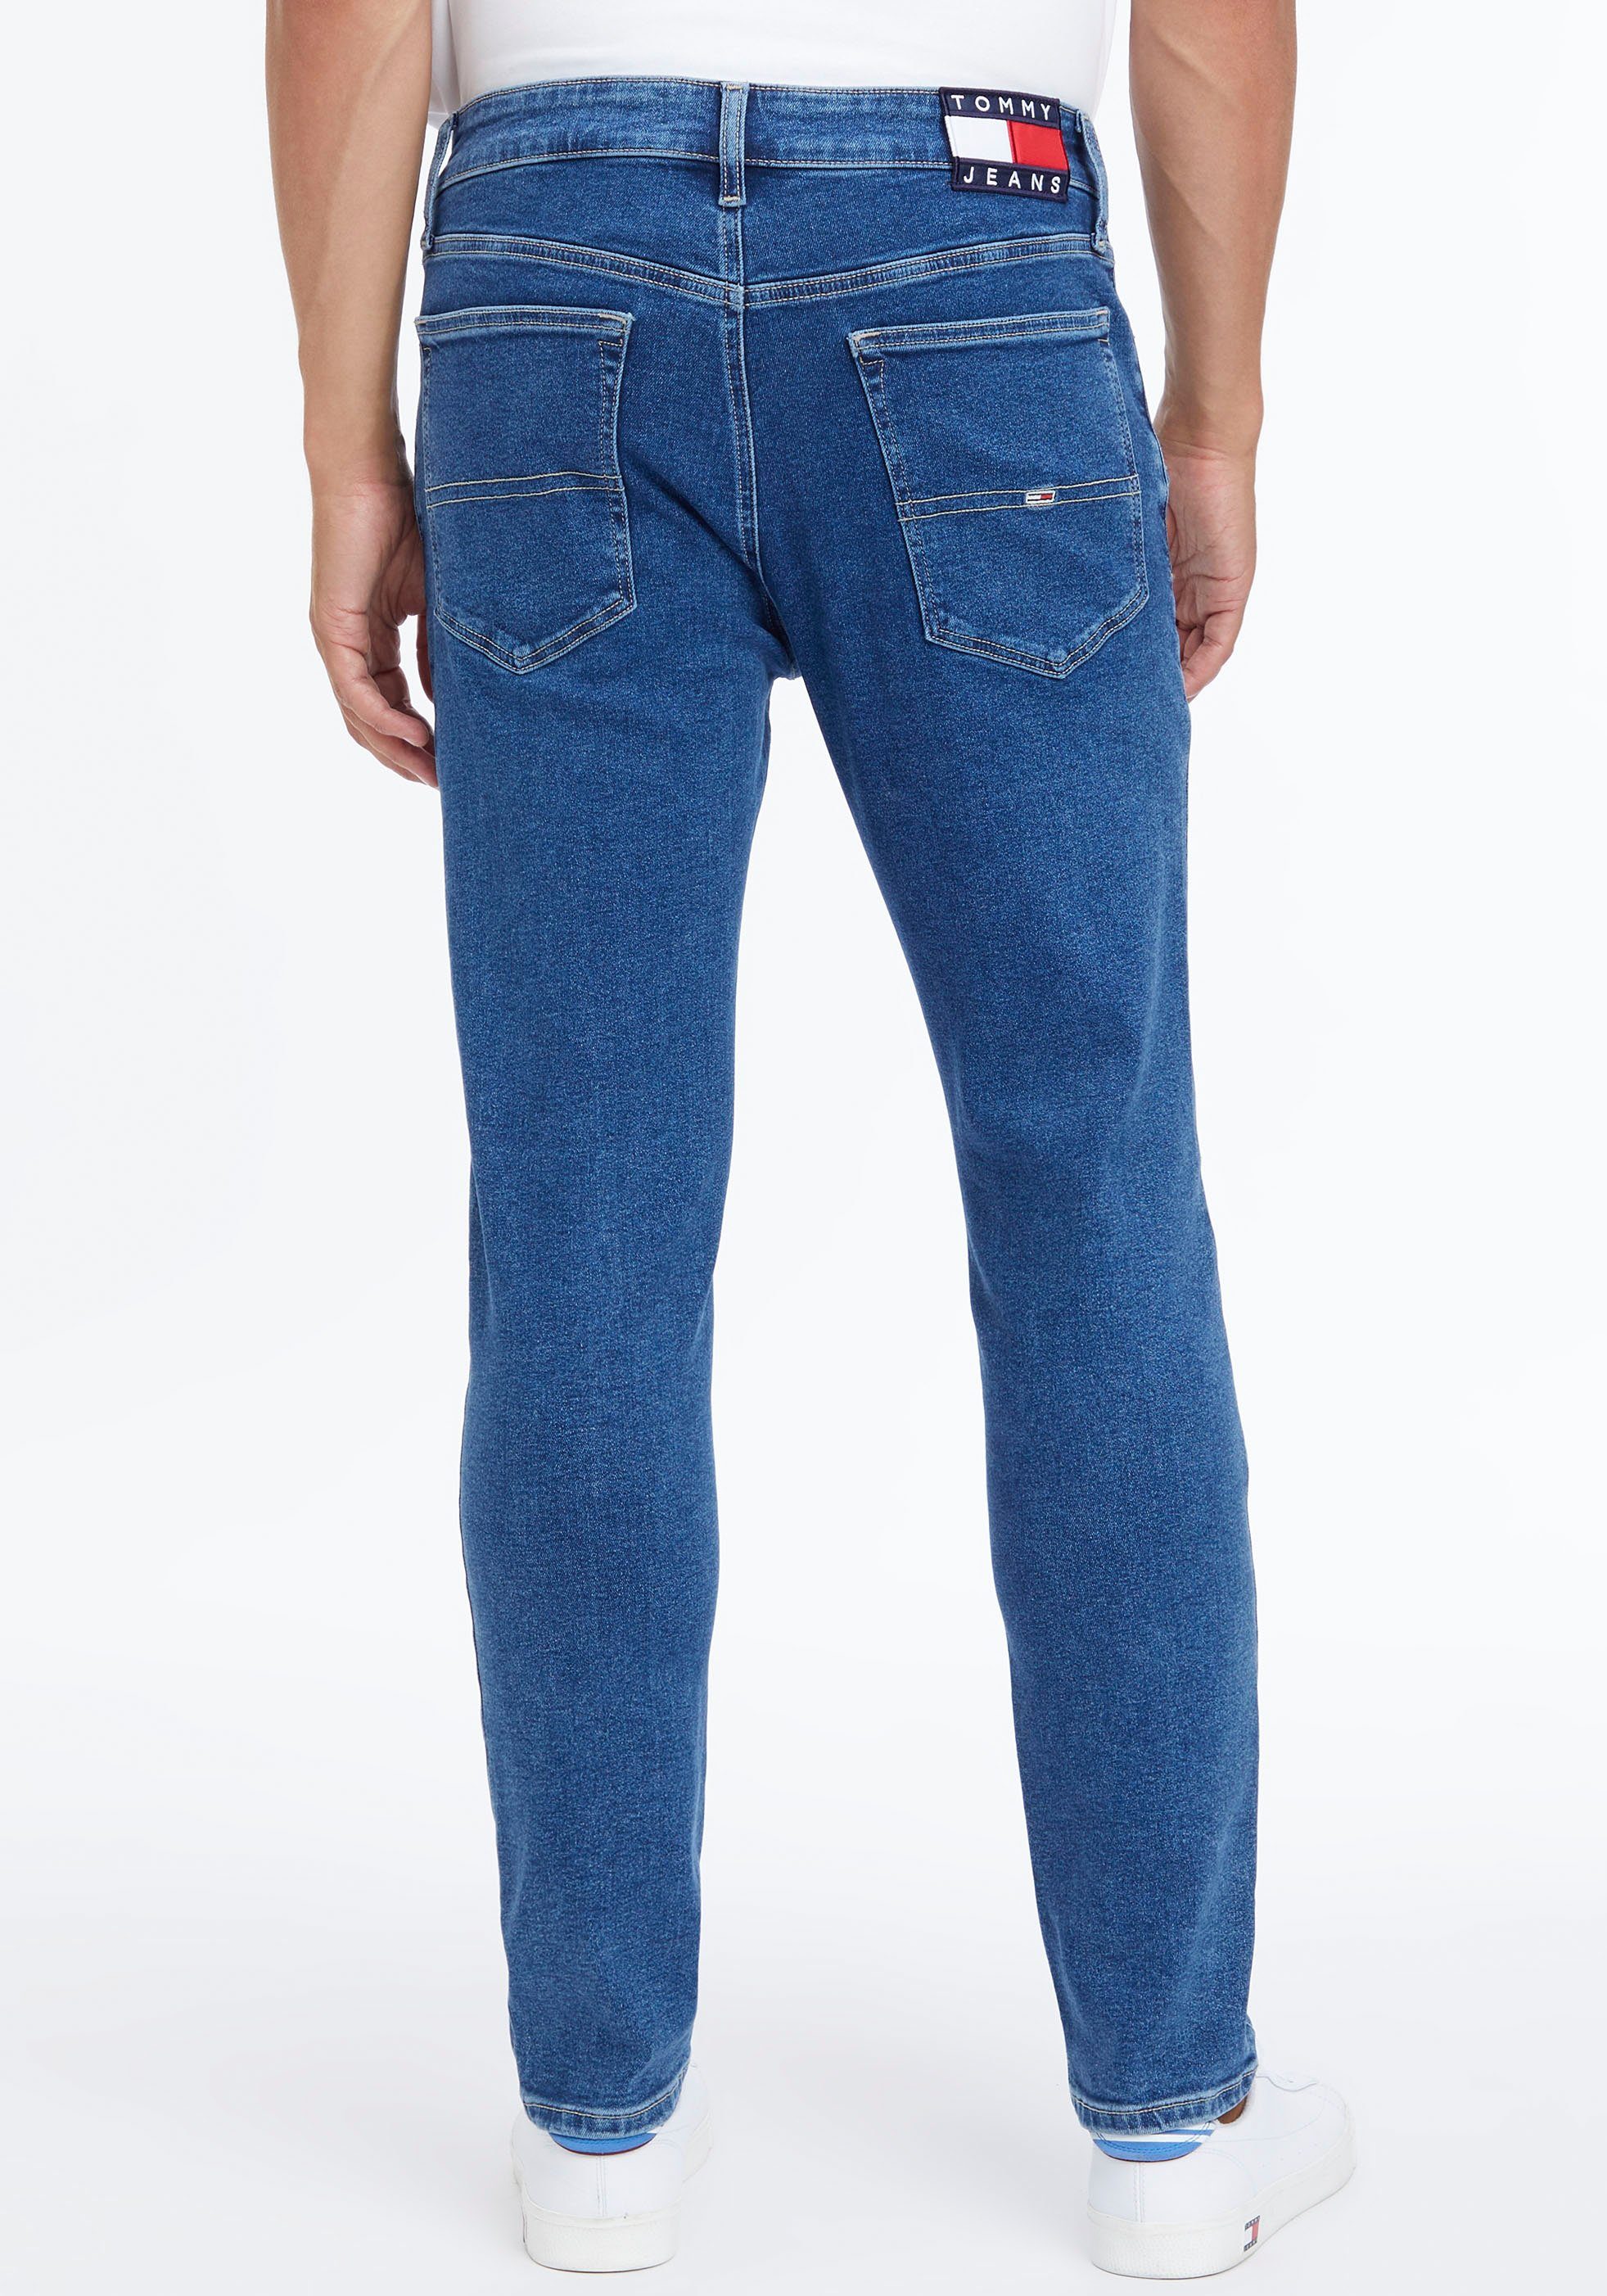 Tommy Jeans 5-Pocket-Jeans SIMON AG6234 SKINNY